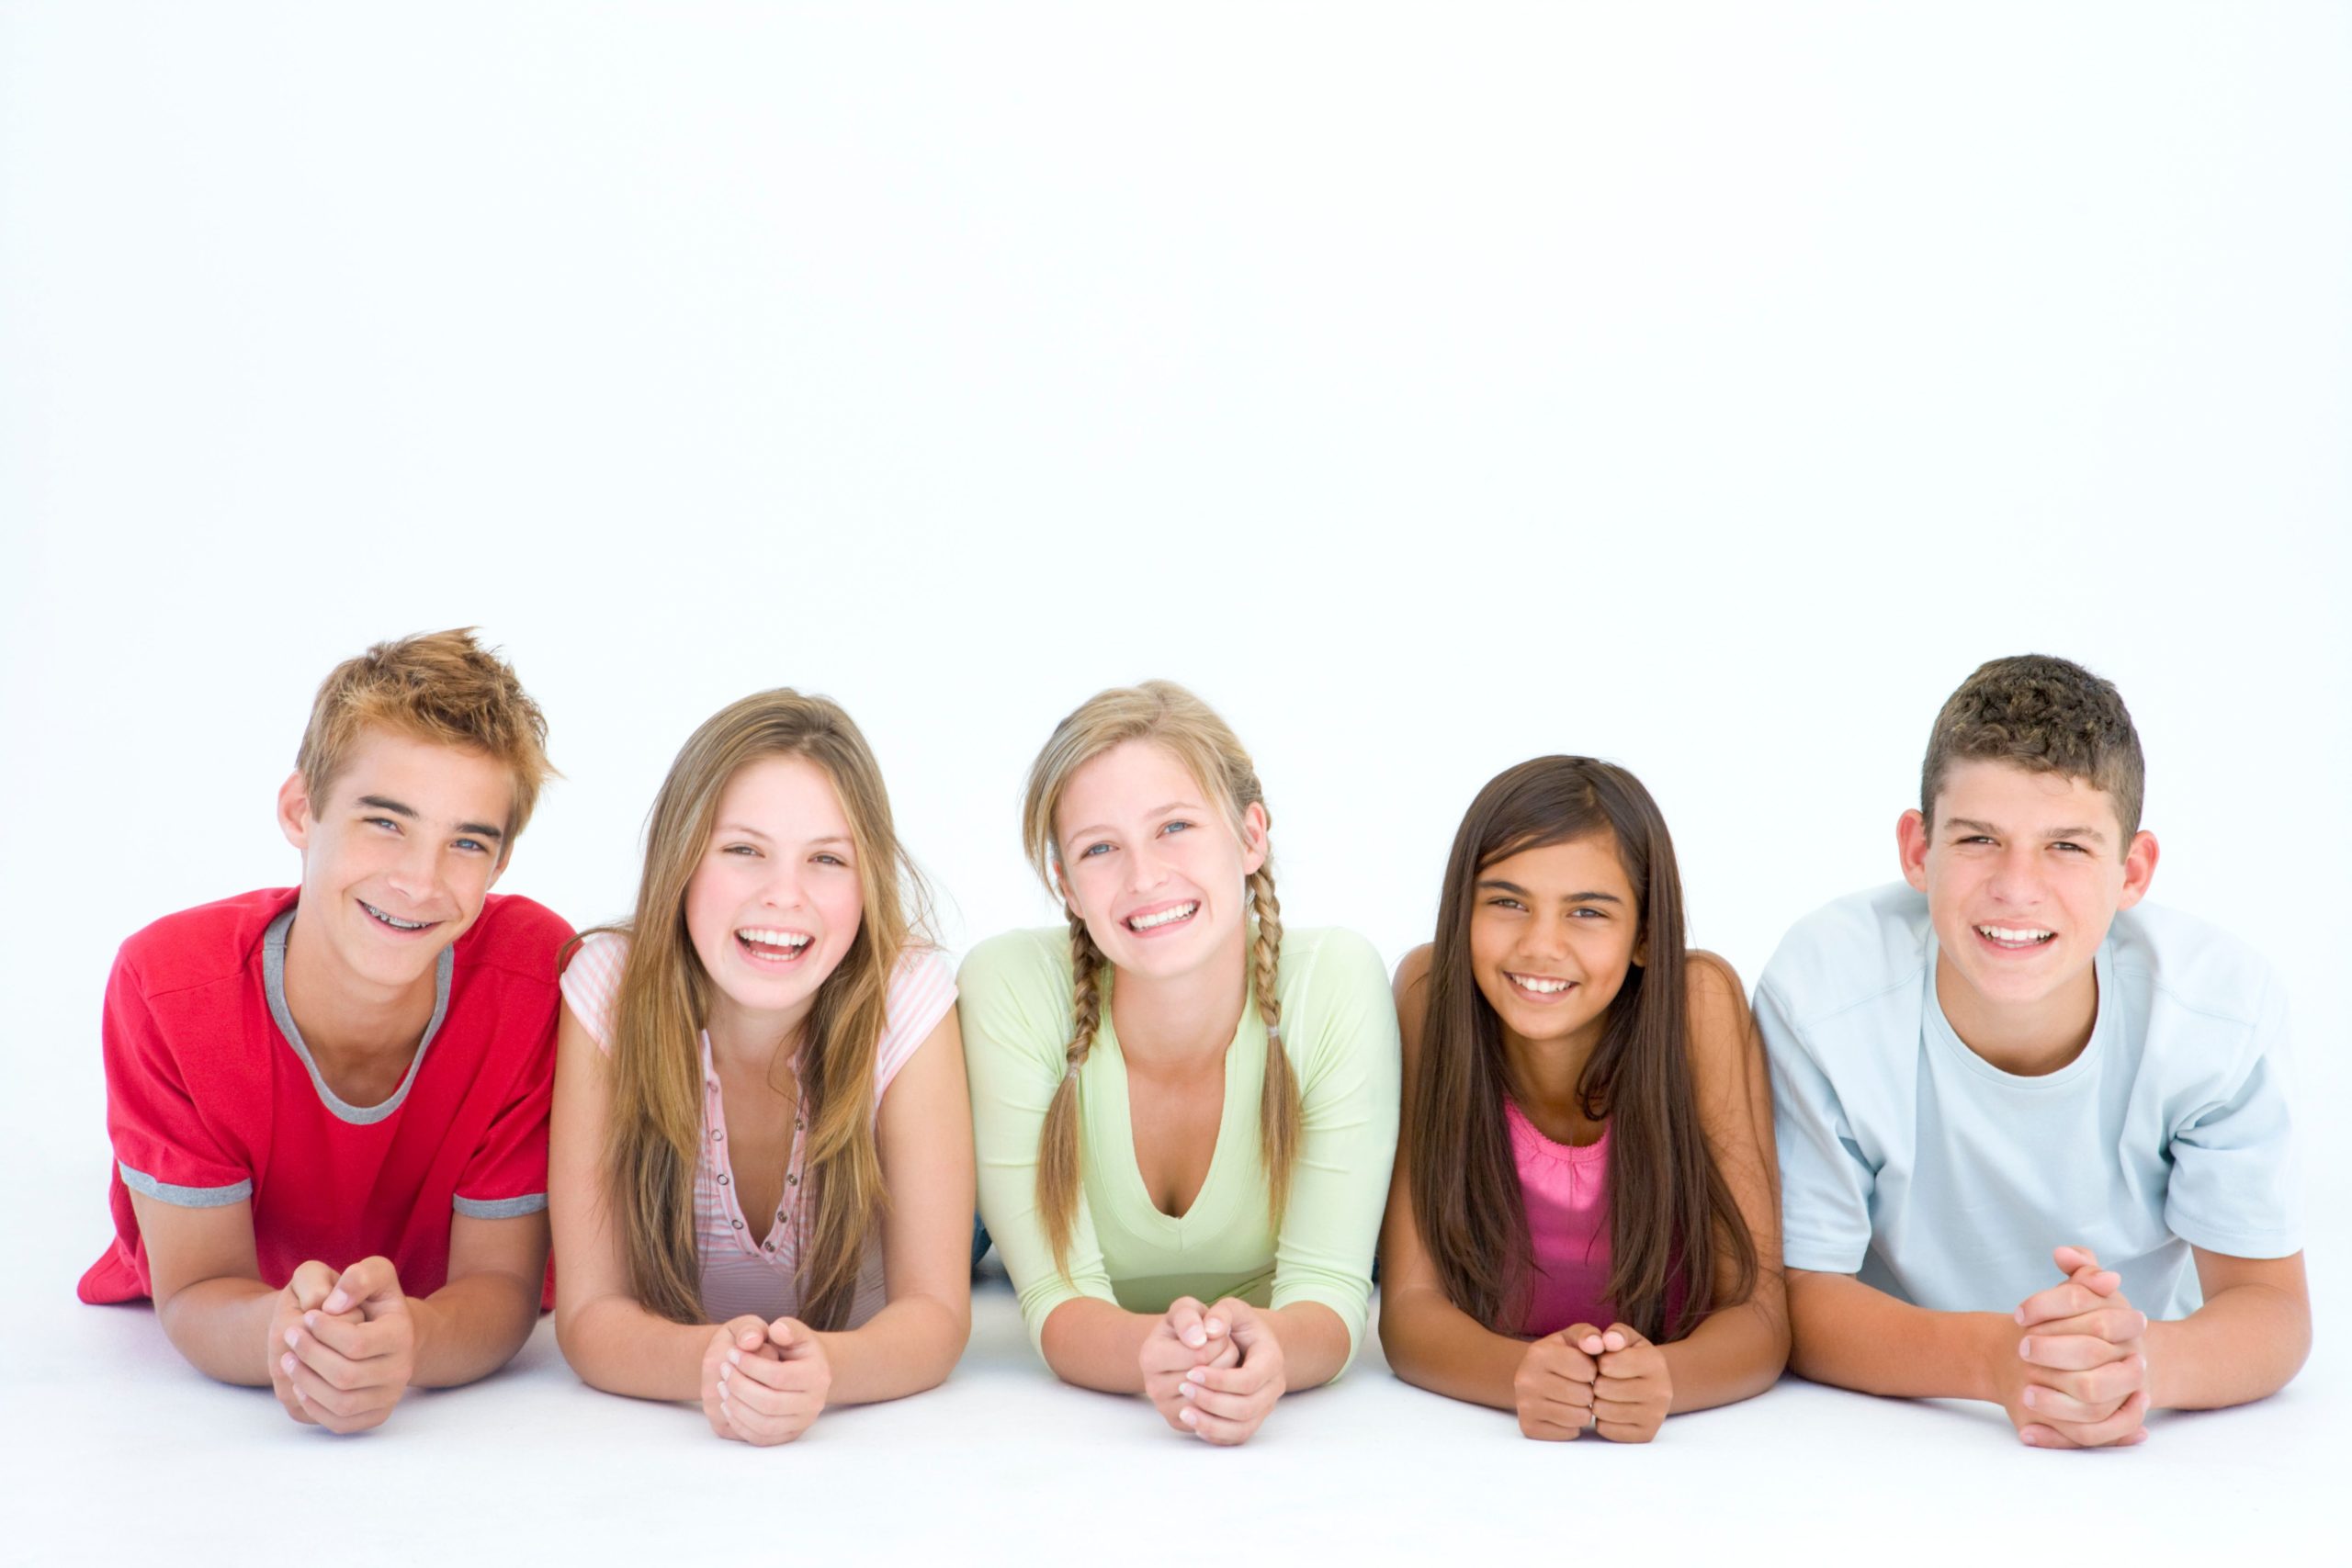 Happy teenagers for Invisalign aligners to straighten teeth